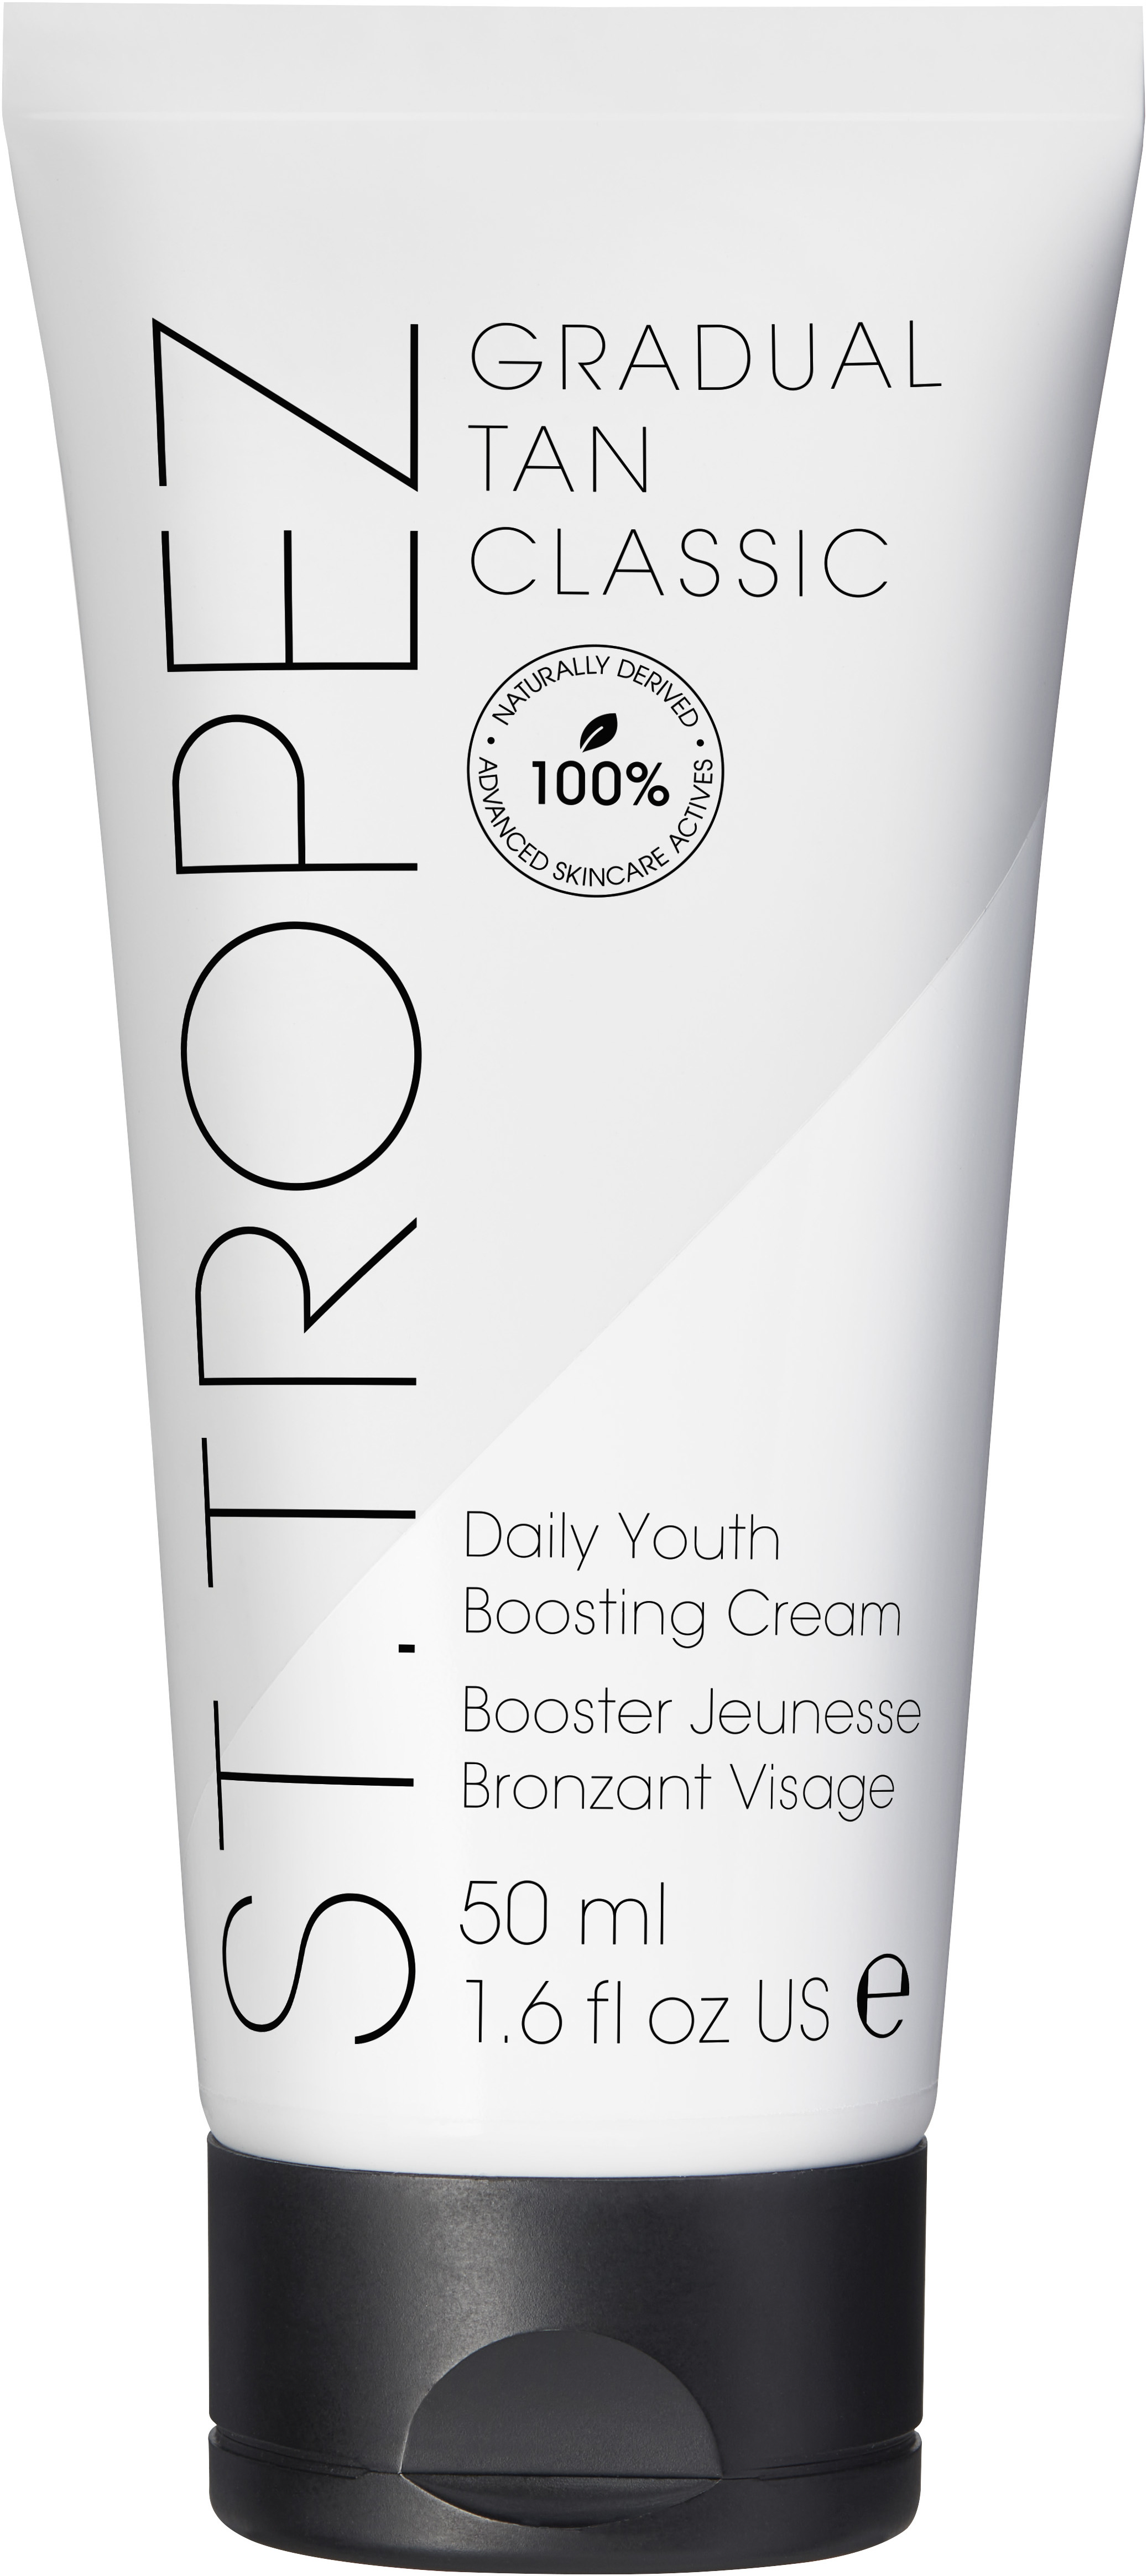 St. Tropez Gradual Tan Classic Daily Youth Boosting Face Cream 50 ml